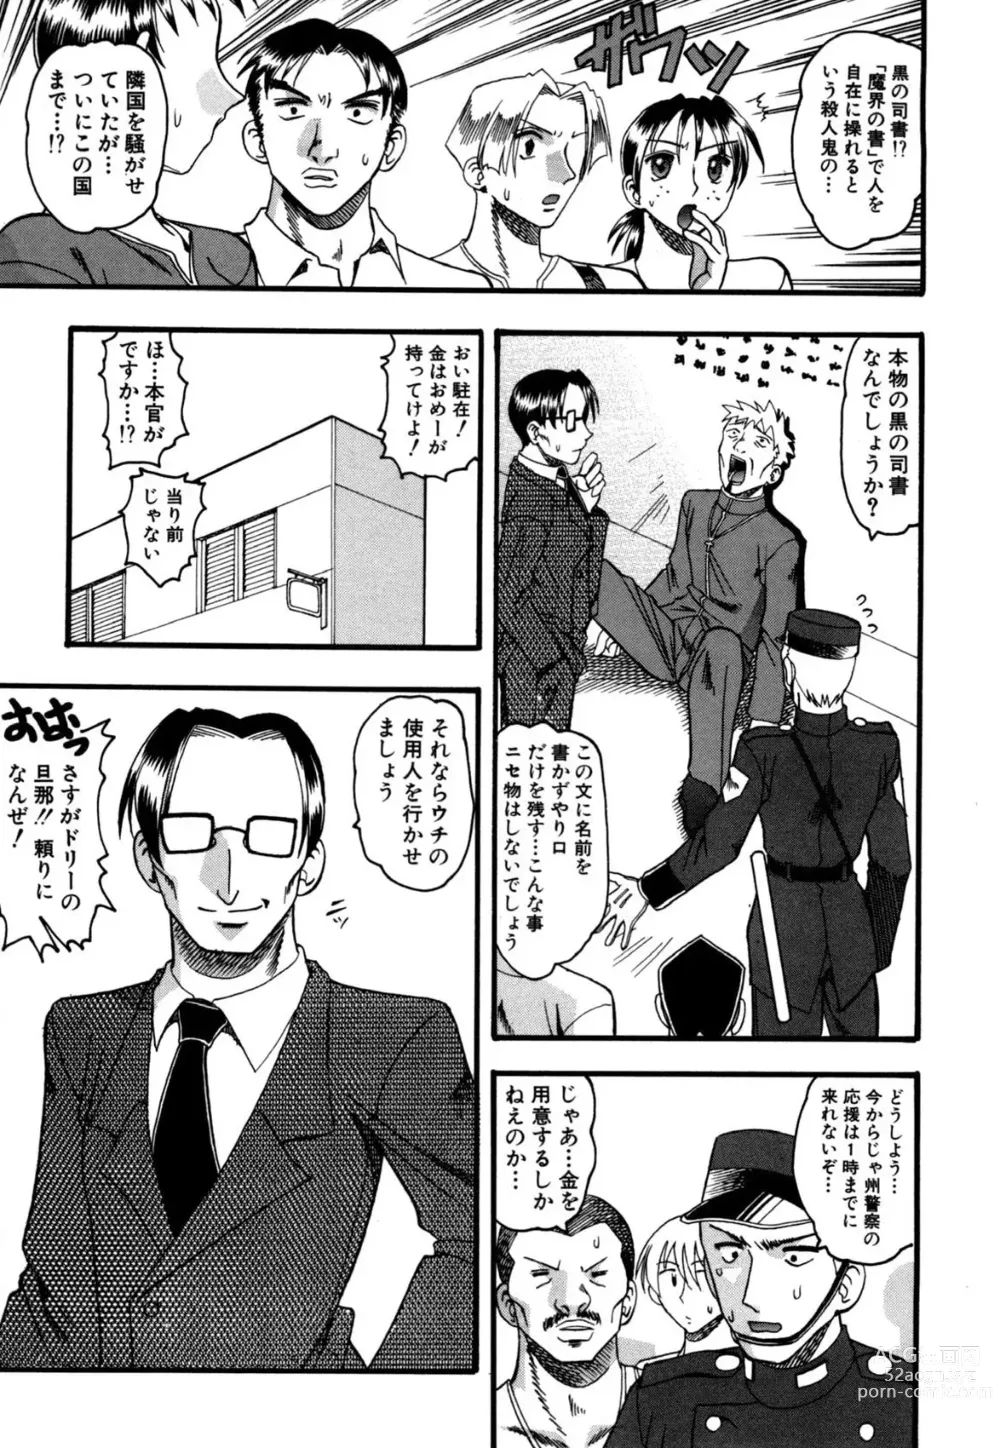 Page 8 of manga Mizugism